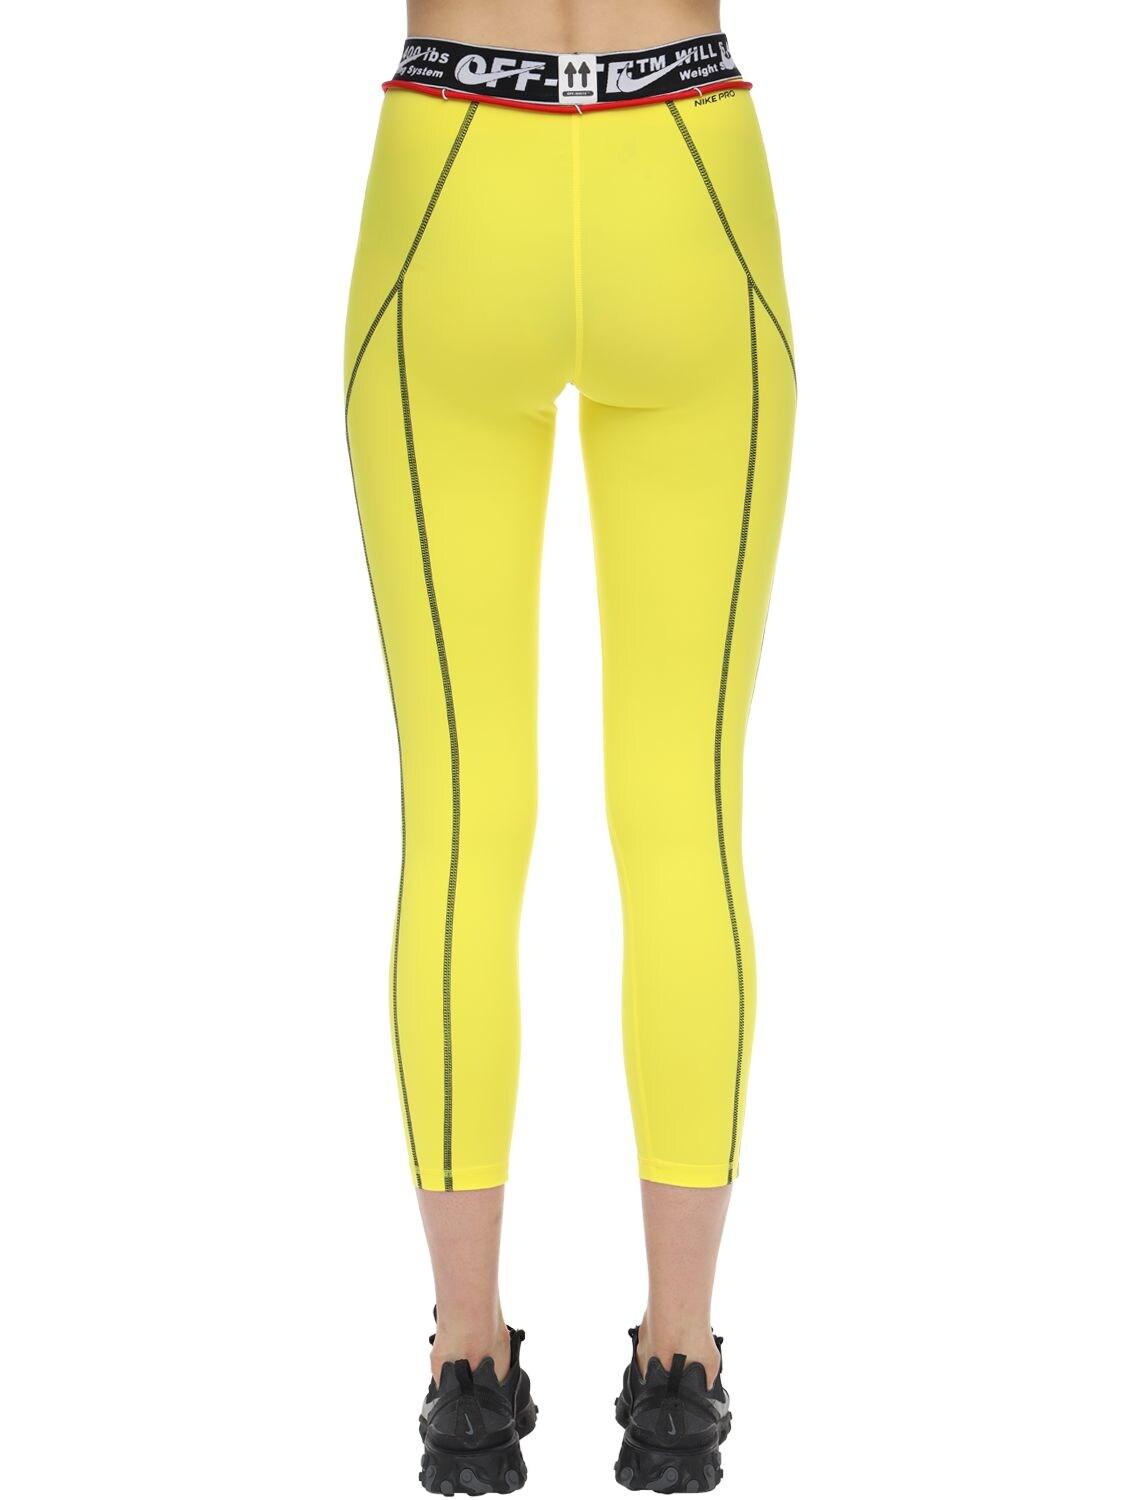 Nike Off-white W Nrg Ru Pro Tight Leggings in Yellow | Lyst